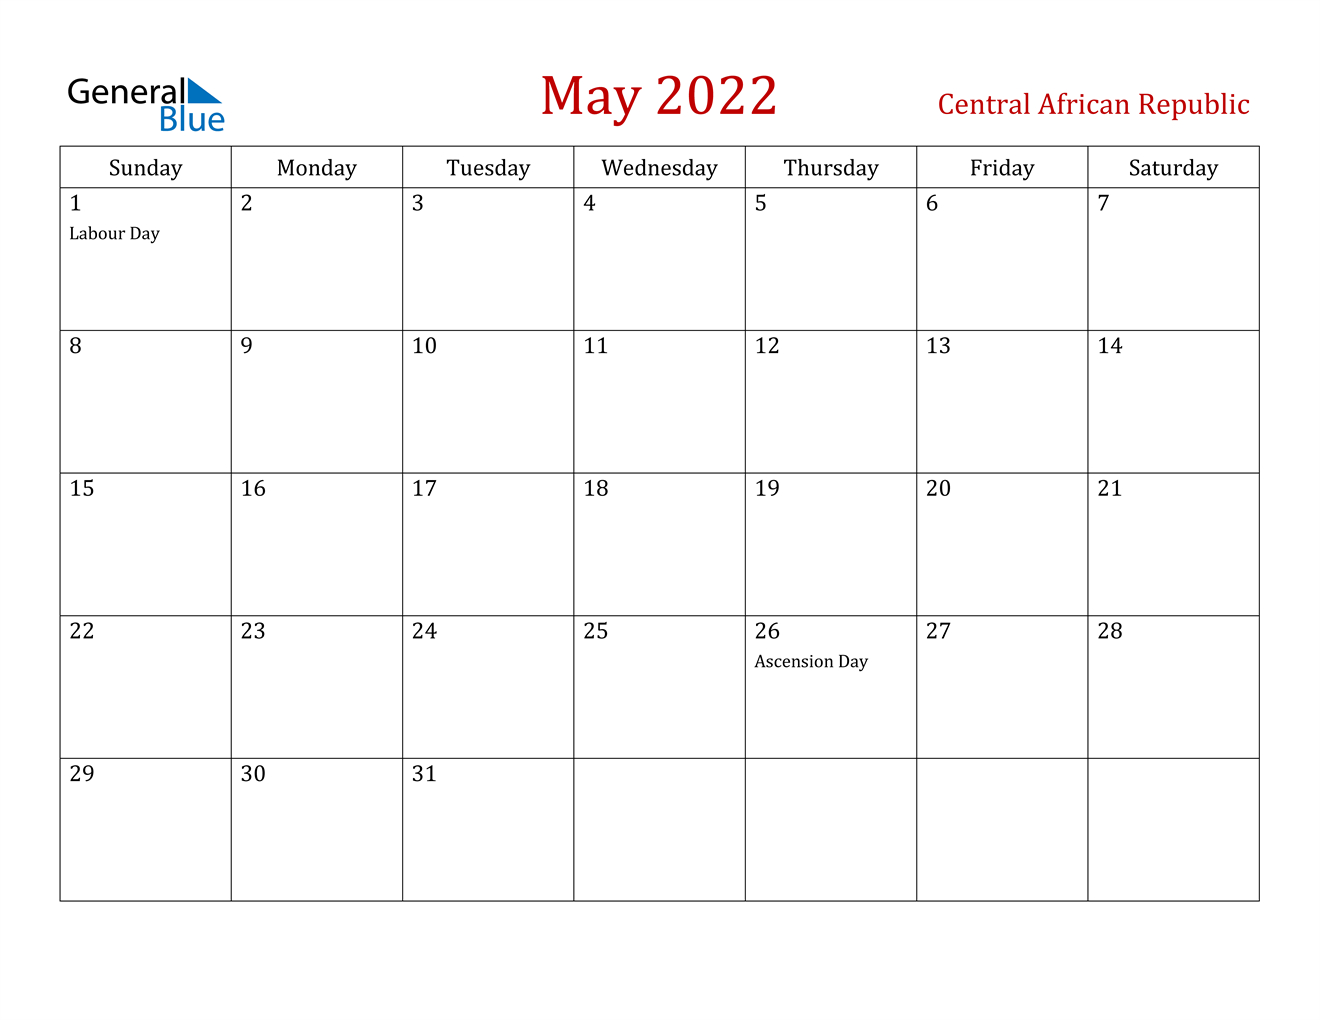 May 2022 Calendar - Central African Republic